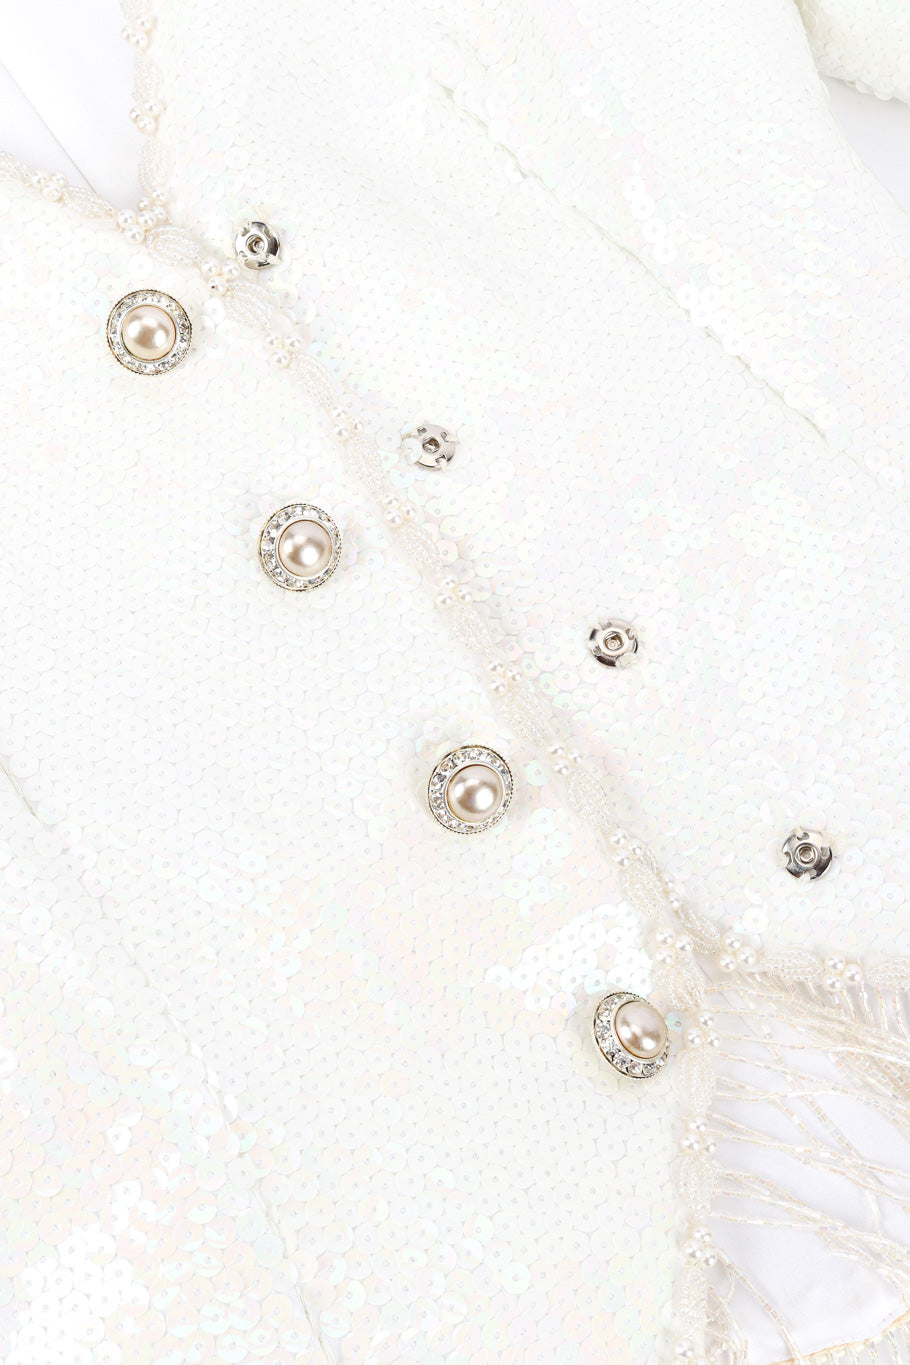  Jacket and skirt set by Julie Duroche buttons close @recessla 